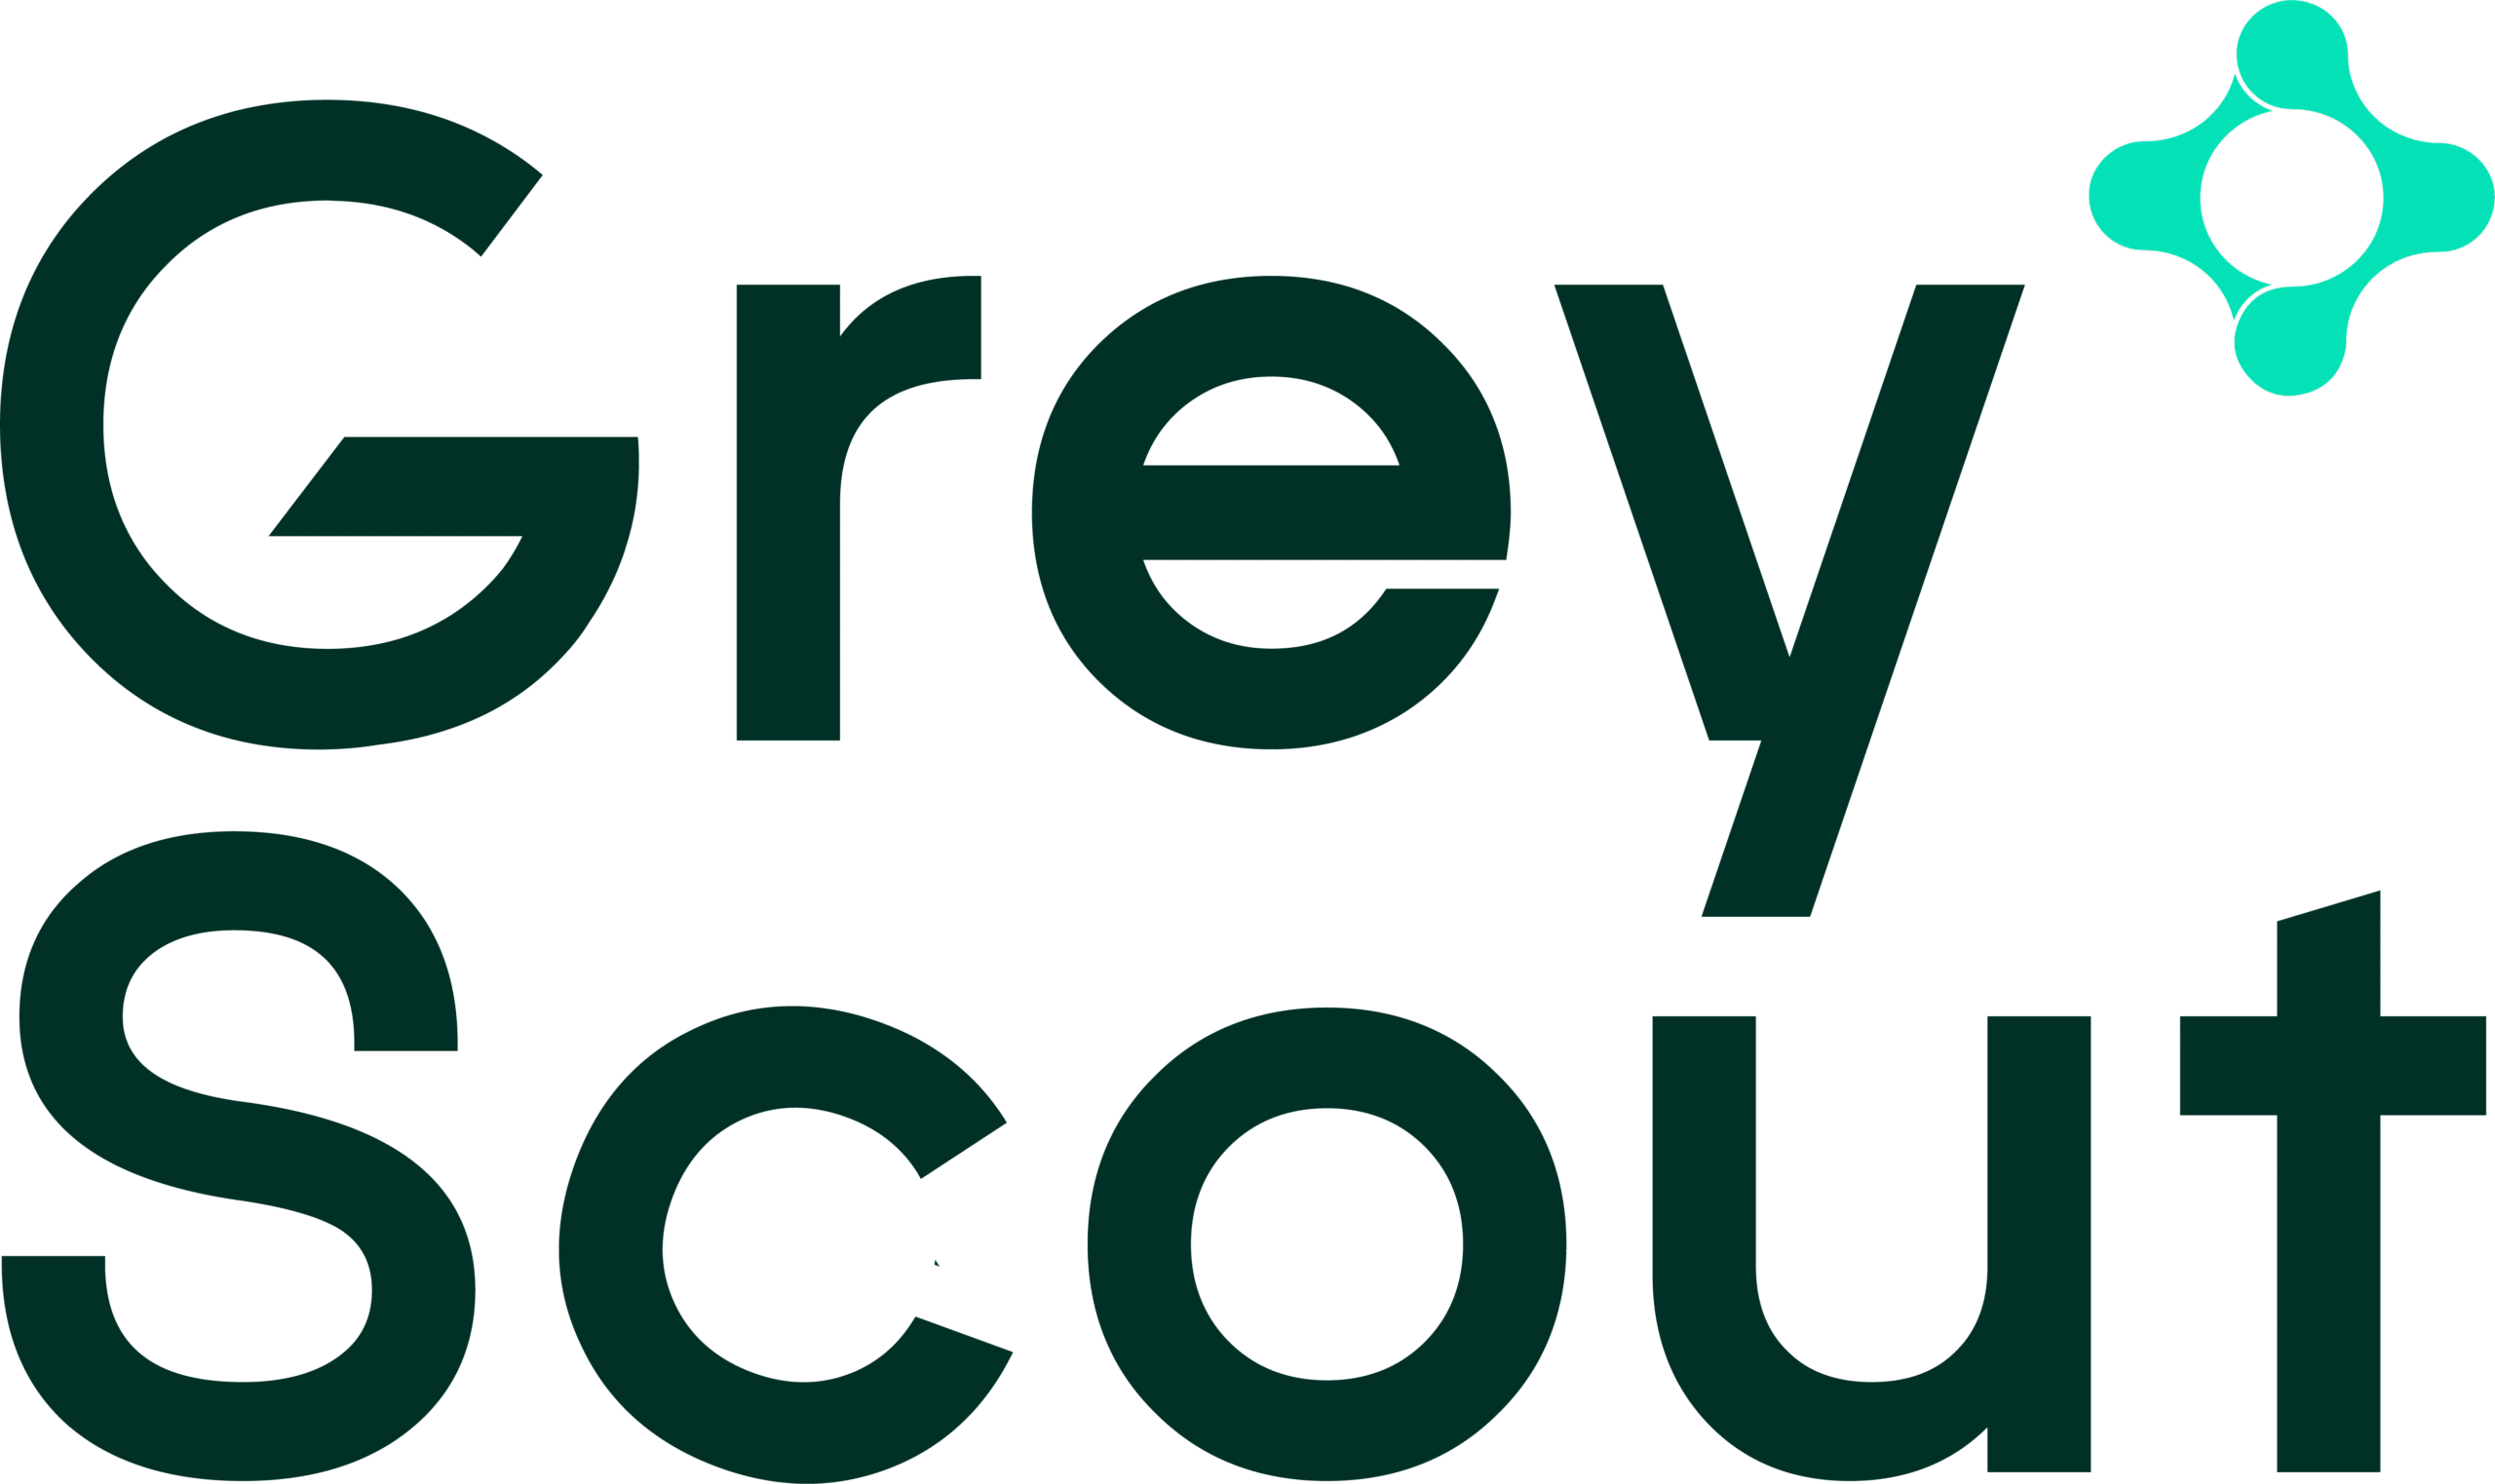 GreyScout Brand Assets Submark 1 Dark Green Aqua 1